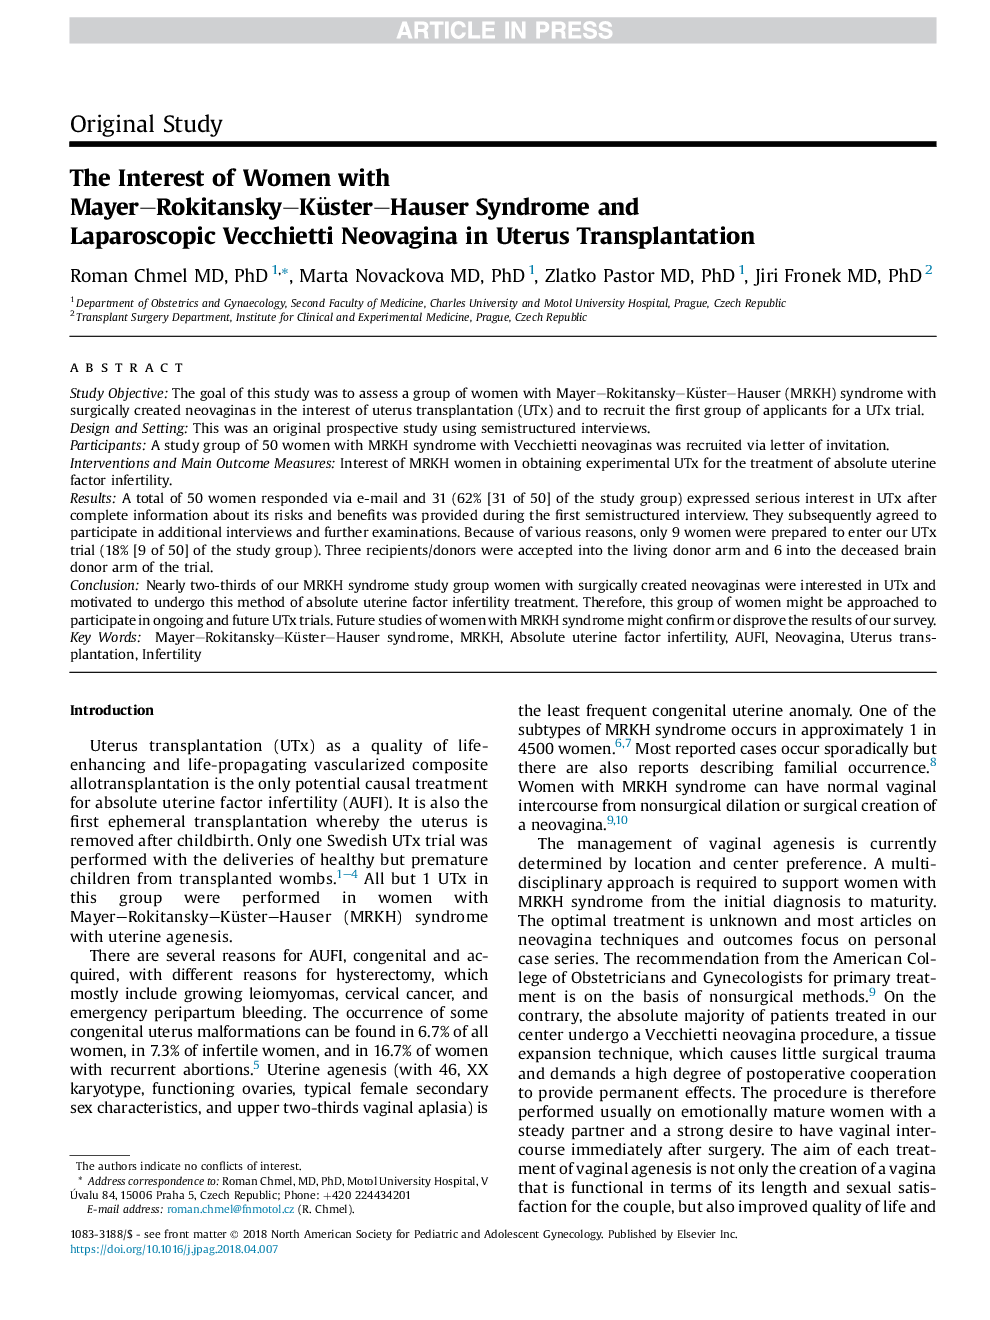 The Interest of Women with Mayer-Rokitansky-Küster-Hauser Syndrome and Laparoscopic Vecchietti Neovagina in Uterus Transplantation